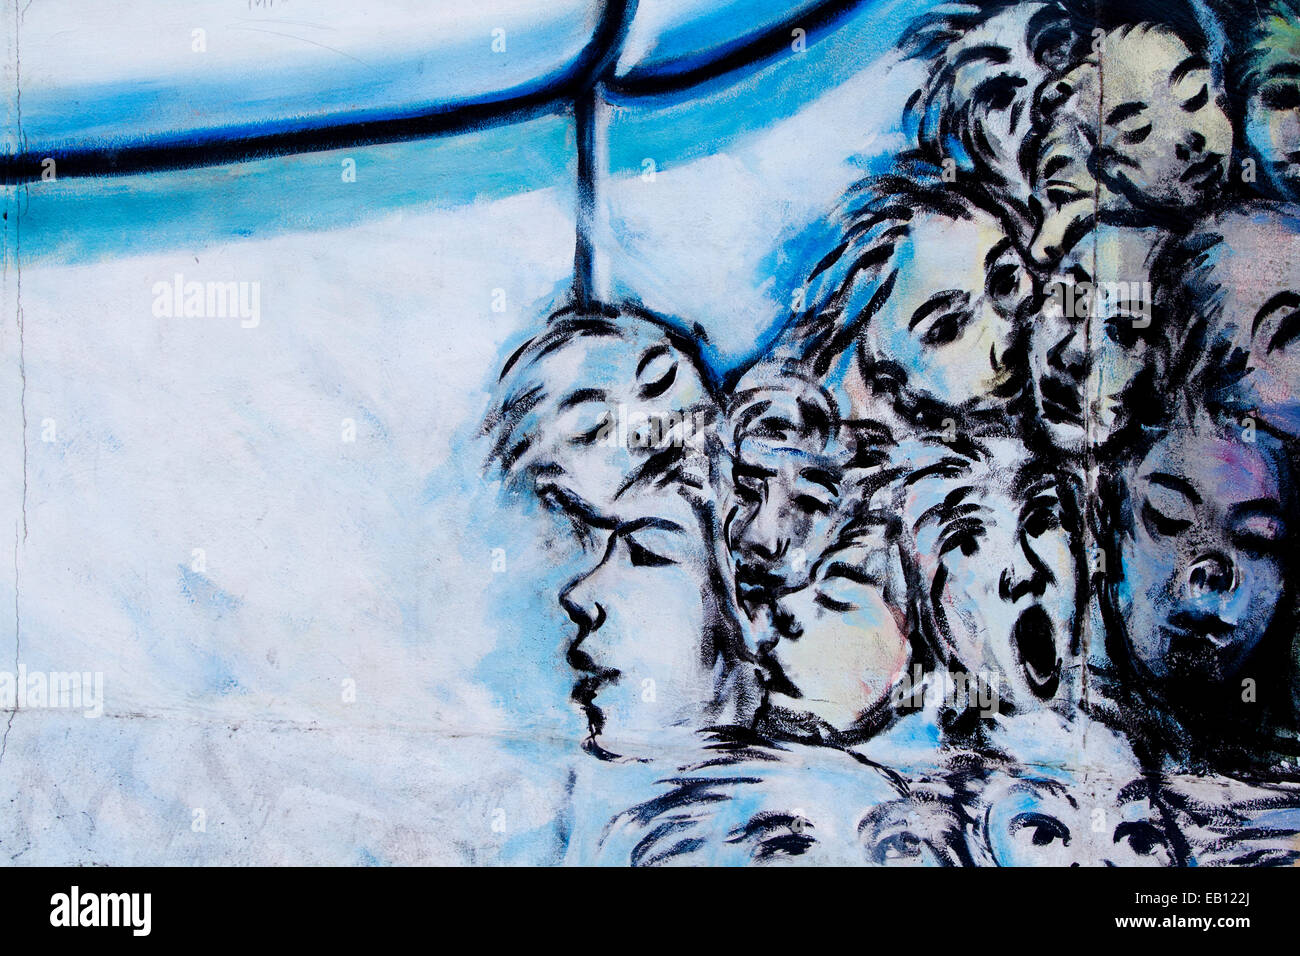 Graffiti tortured faces street art Berlin wall Stock Photo